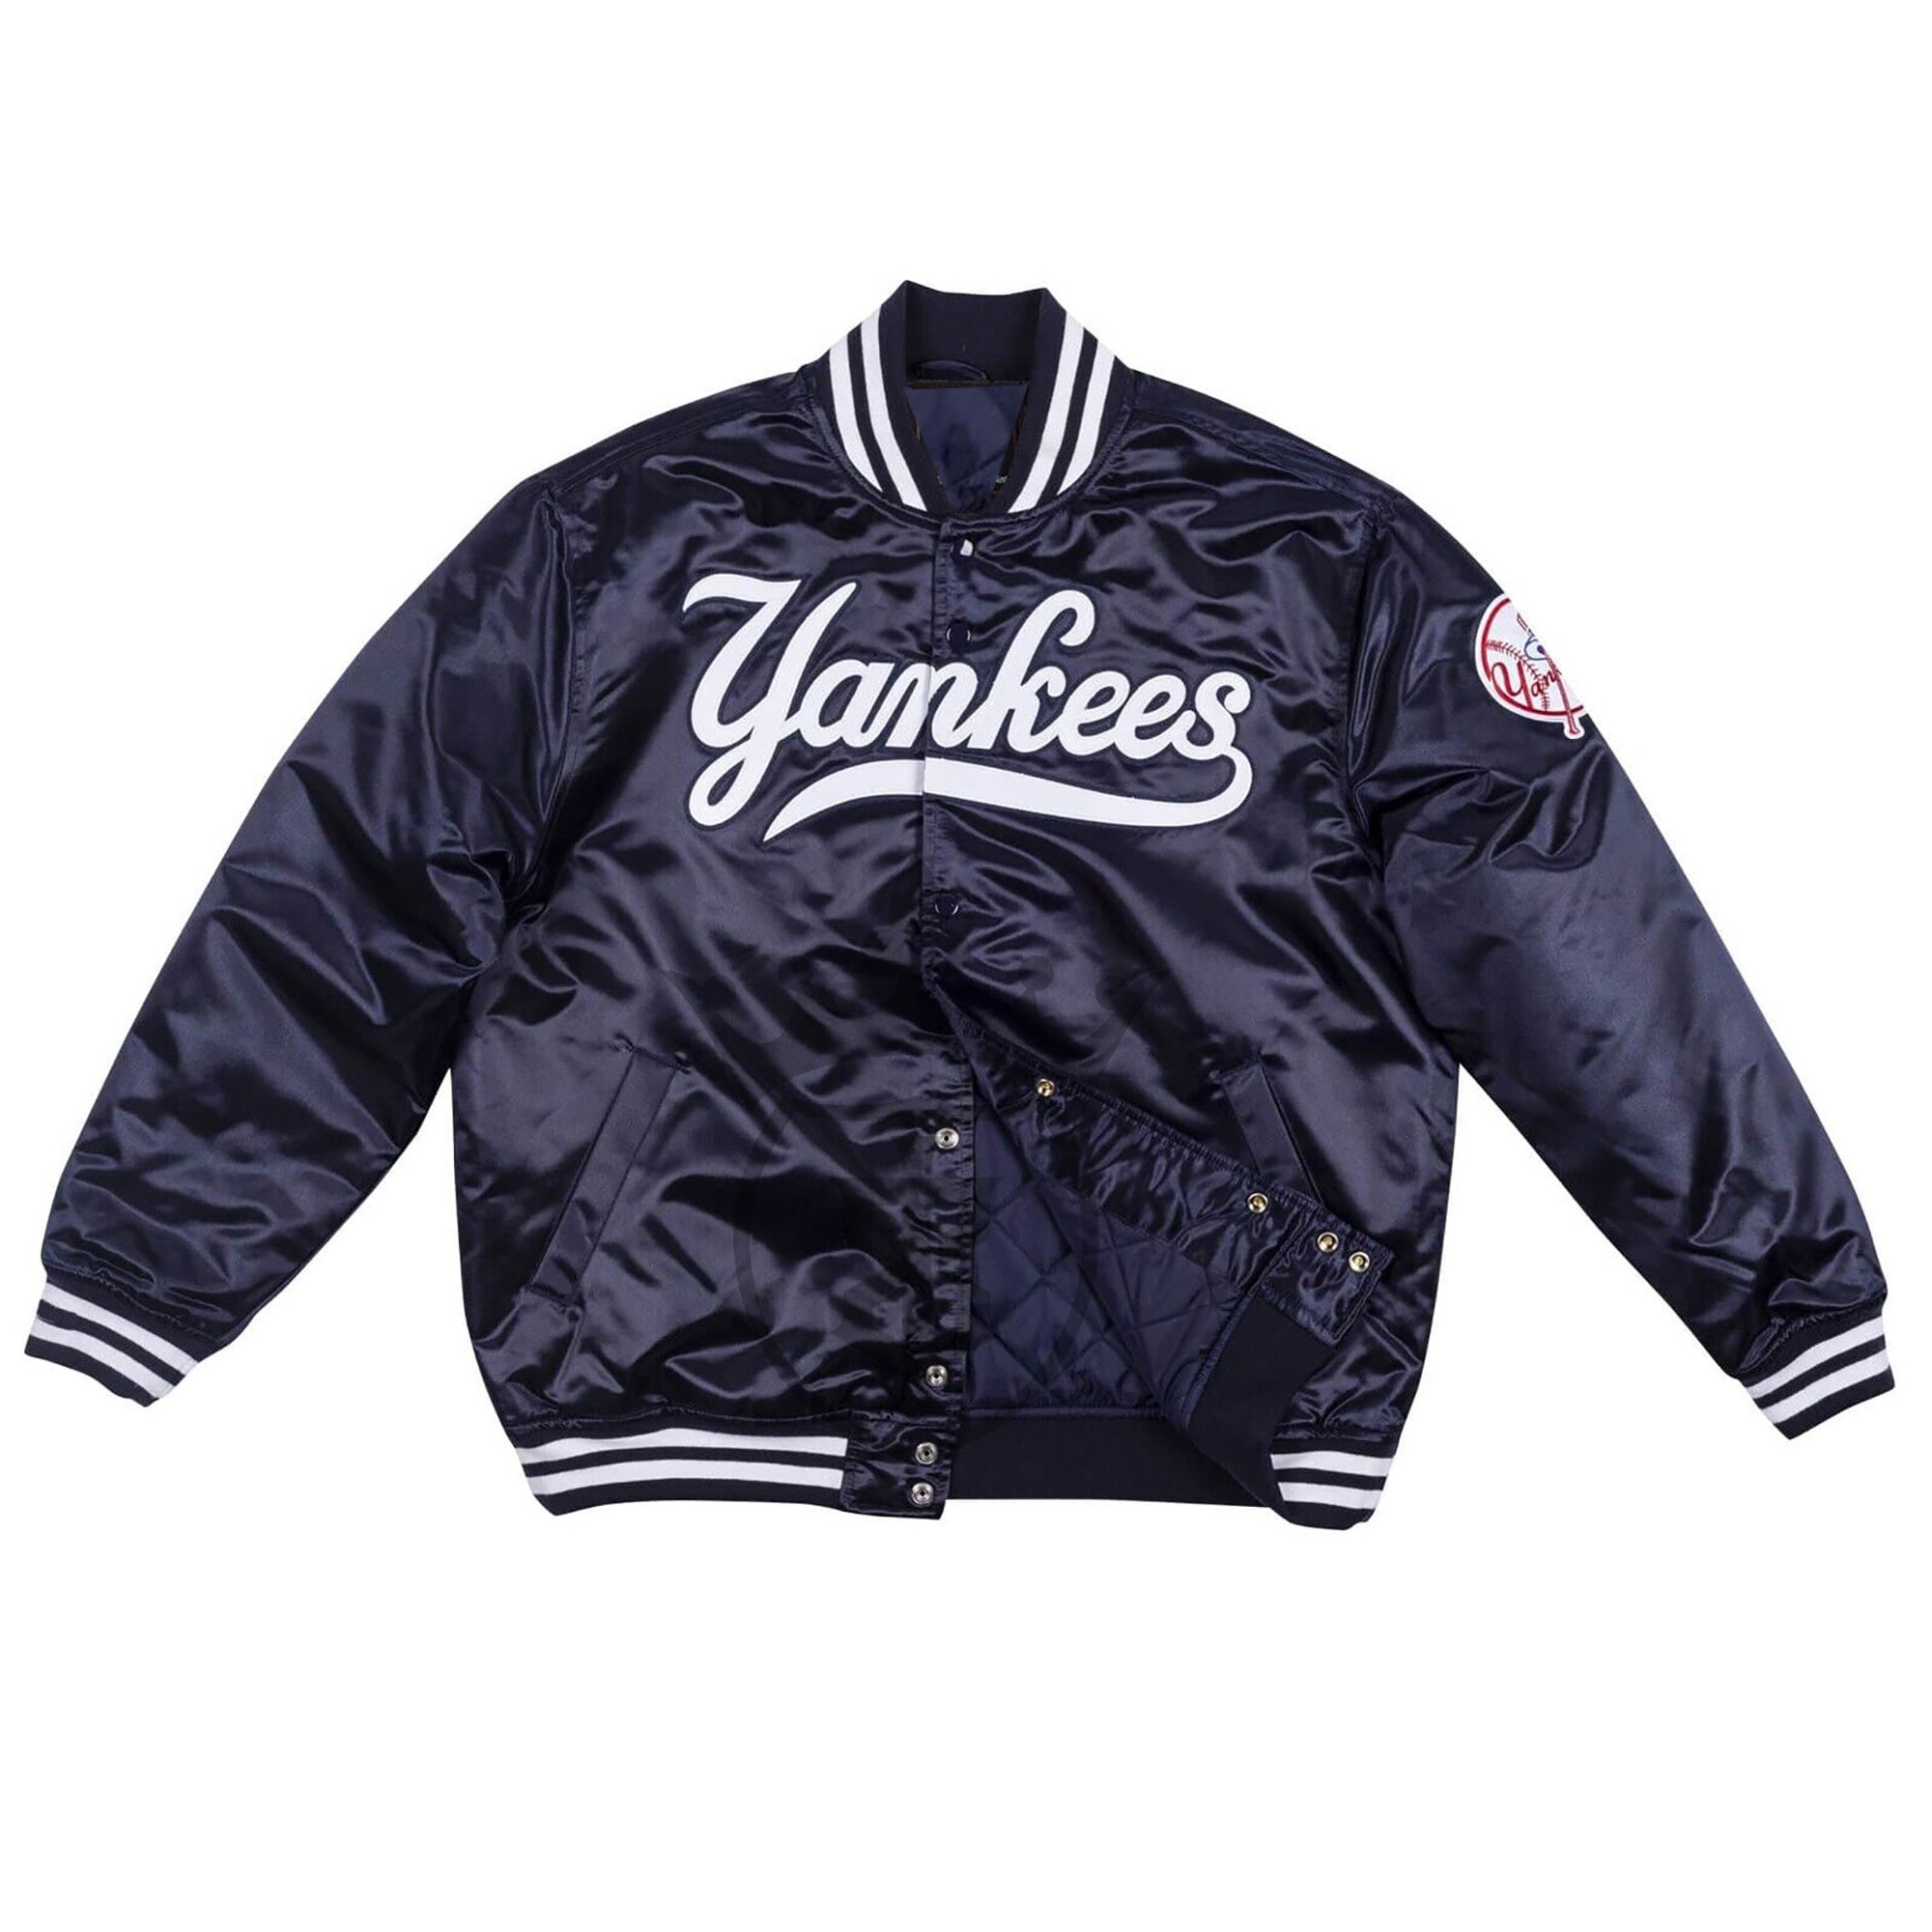 new york yankees jacket